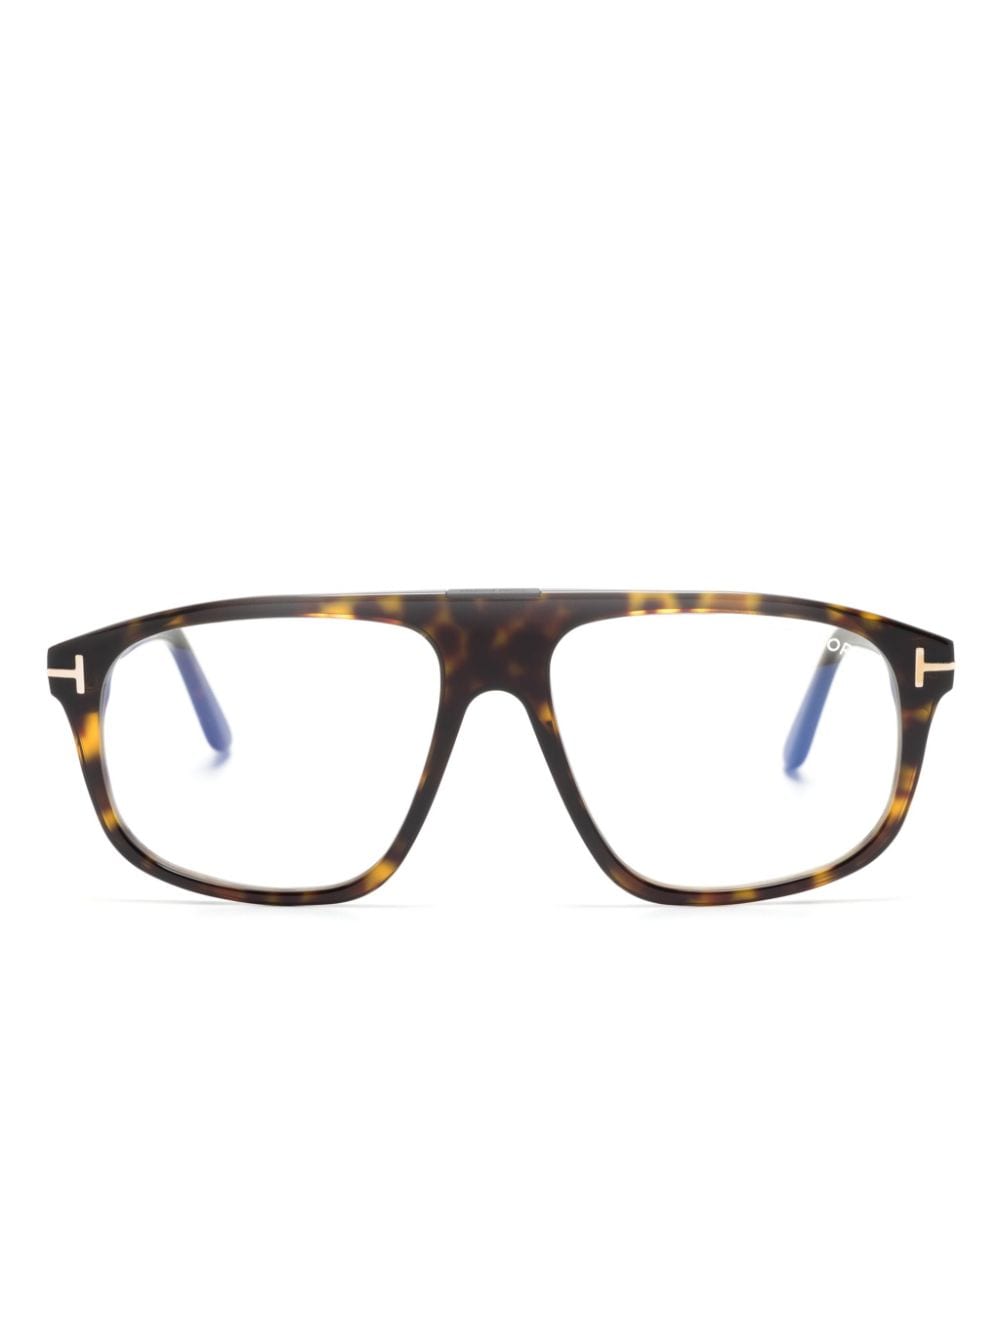 TOM FORD Eyewear FT5901B tortoiseshell pilot-frame glasses - Brown von TOM FORD Eyewear